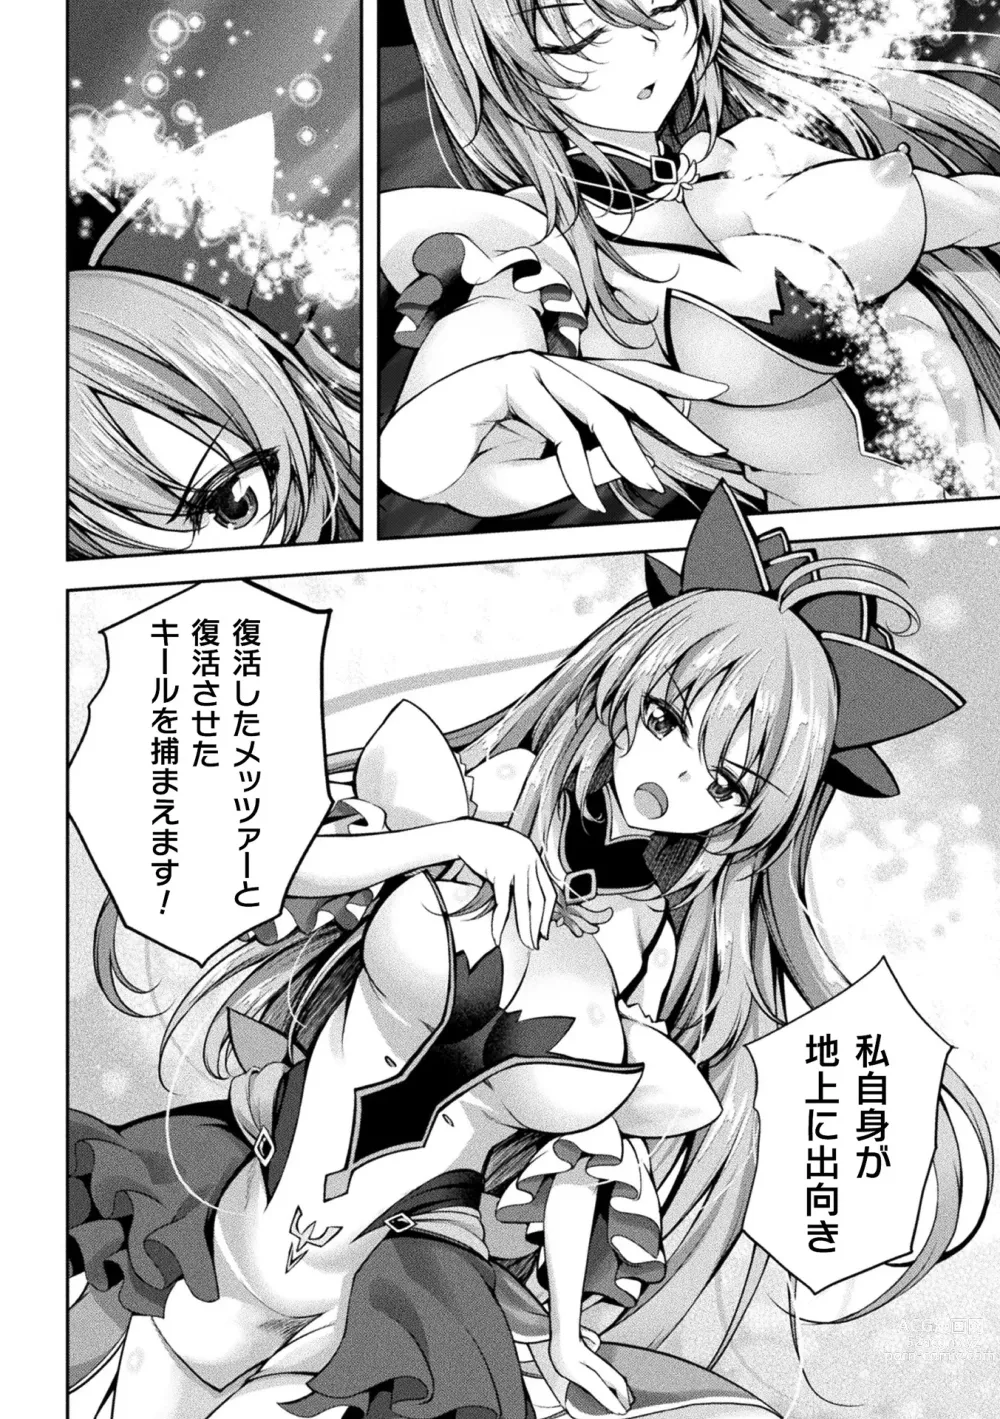 Page 8 of manga Kukkoro Heroines Vol. 33